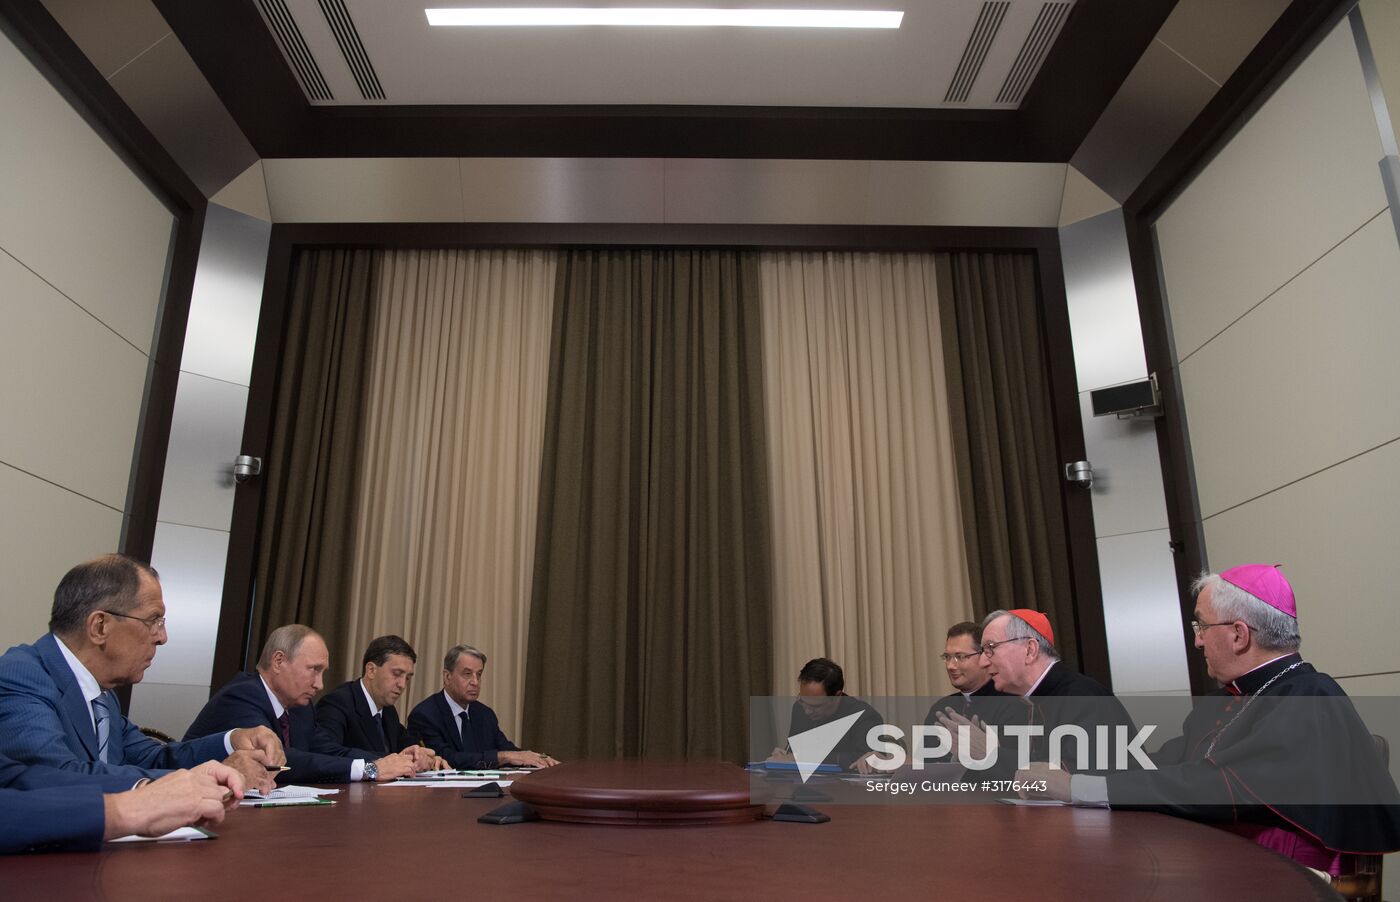 Russian President Vladimir Putin's meeting with Vatican Secretary of State Pietro Parolin